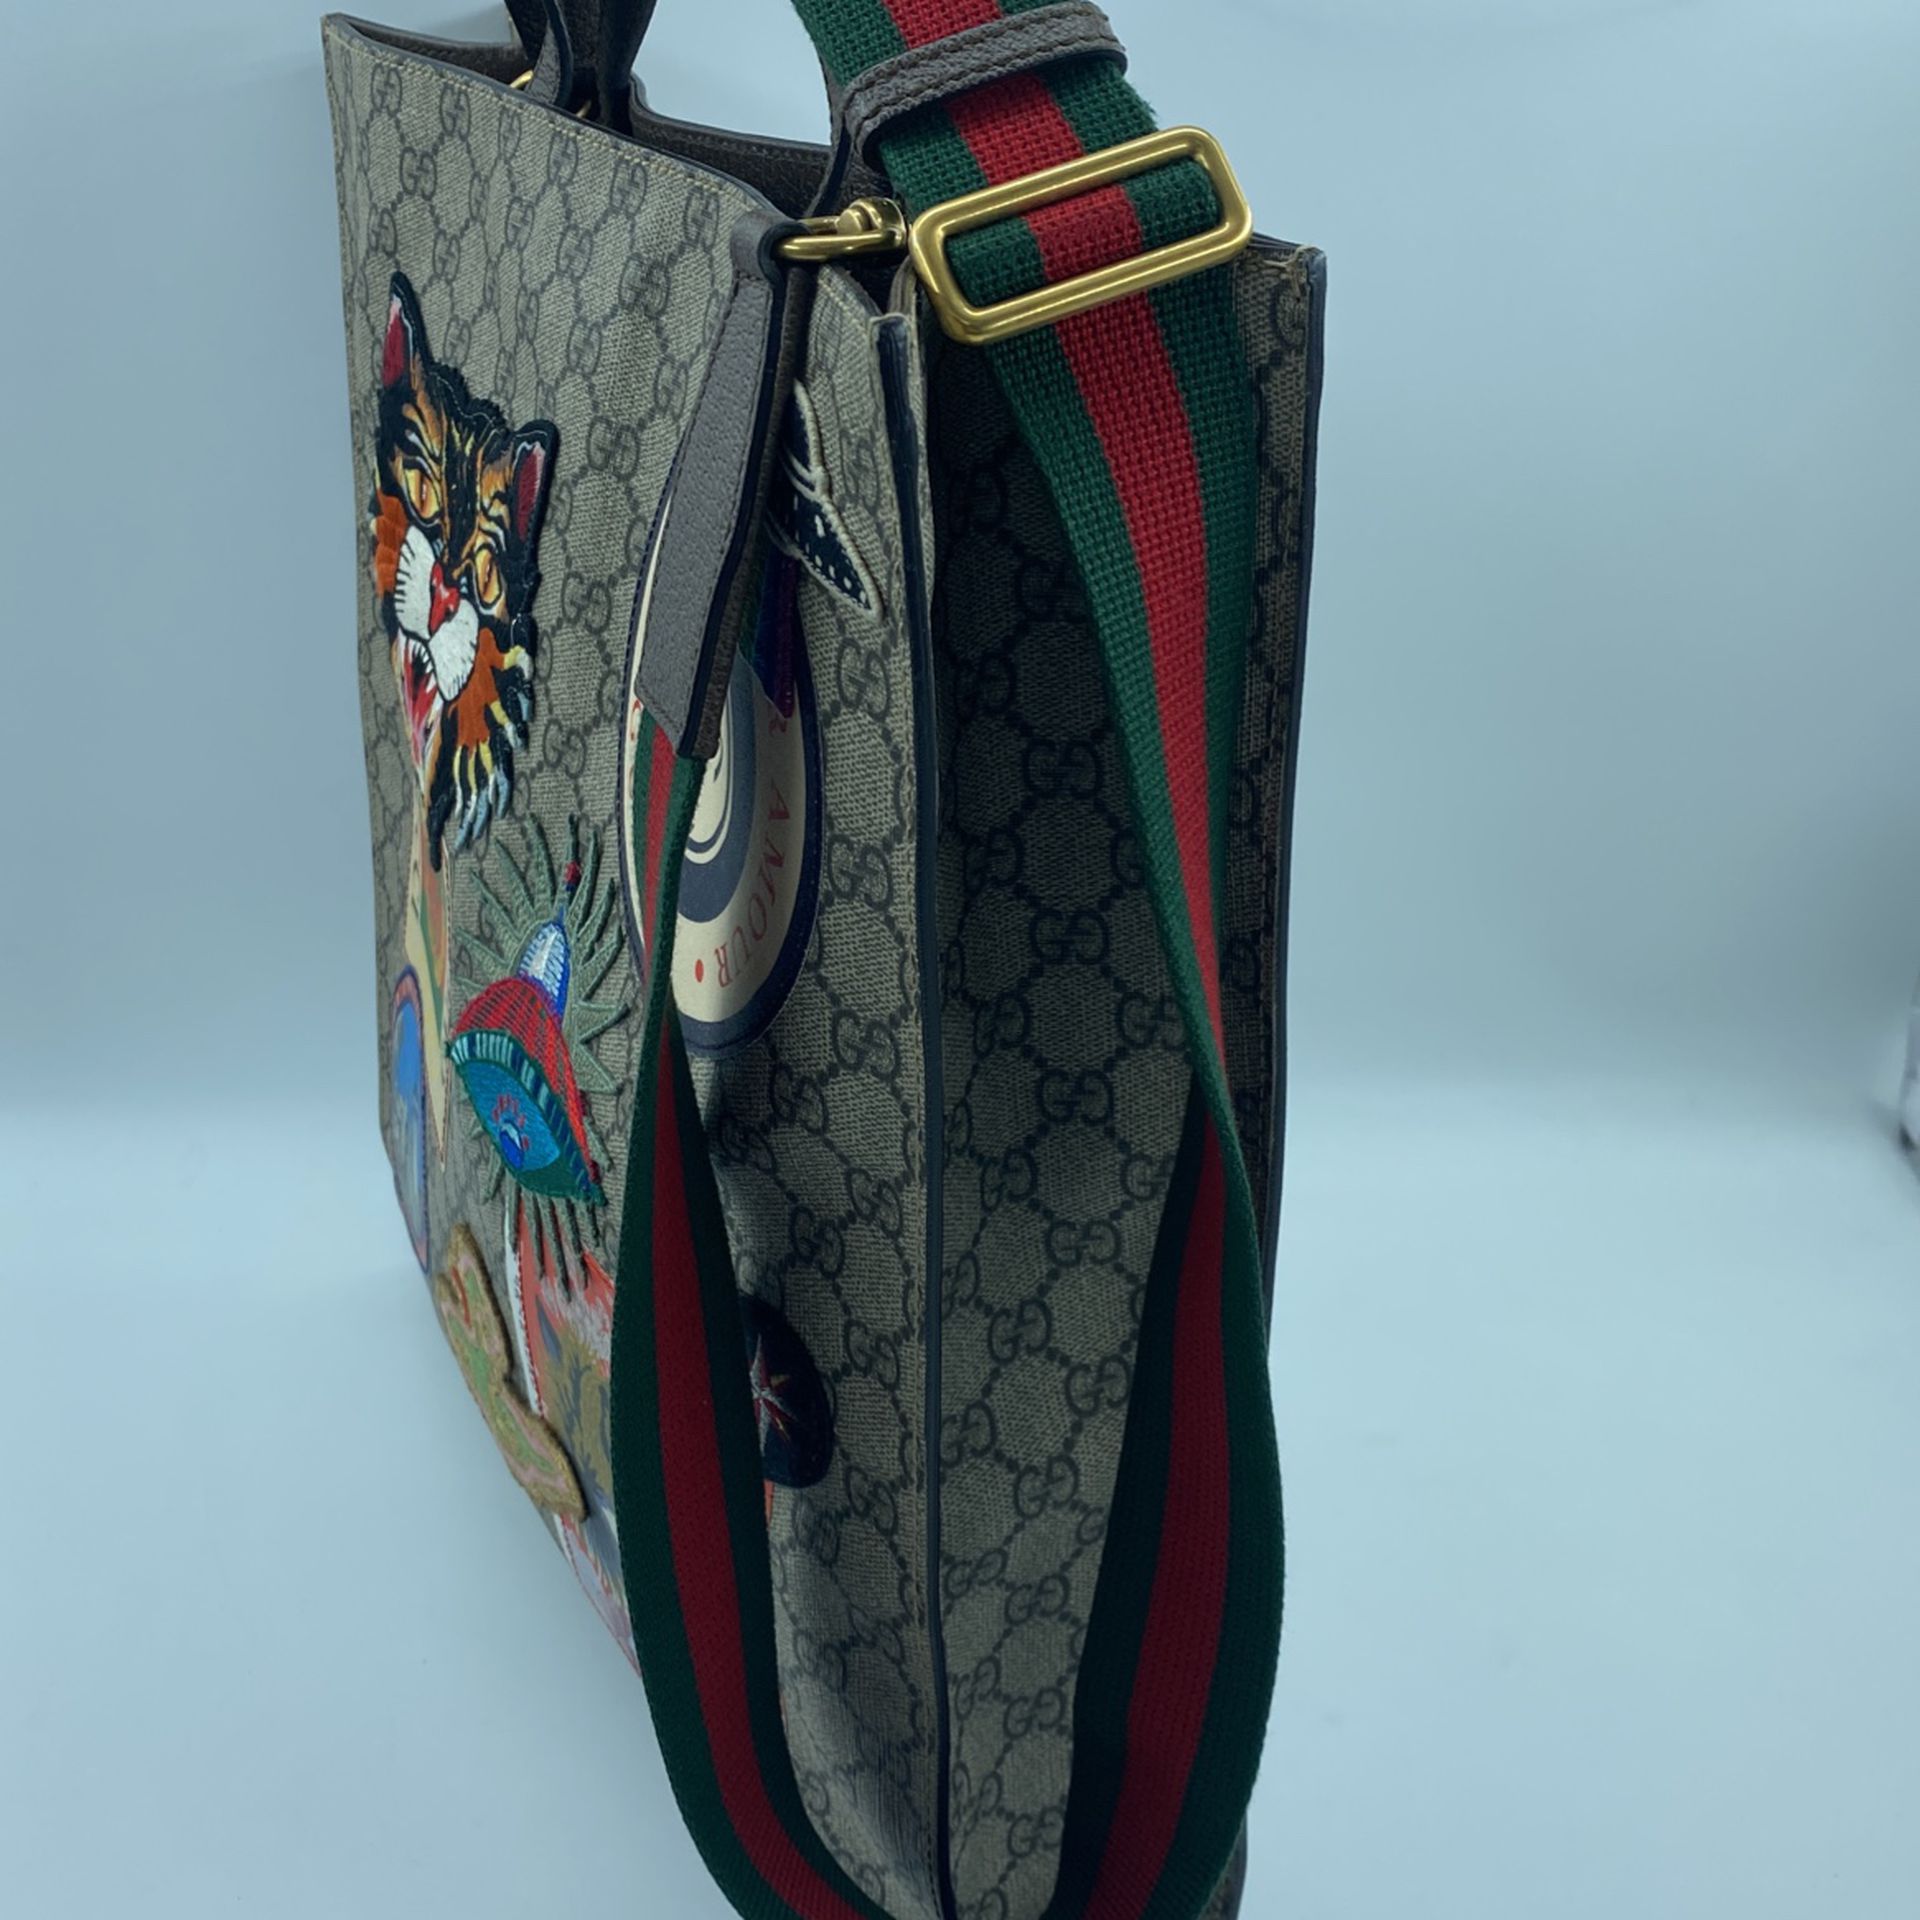 Gucci Padlock Medium GG Shoulder Bag Authentic for Sale in Orlando, FL -  OfferUp